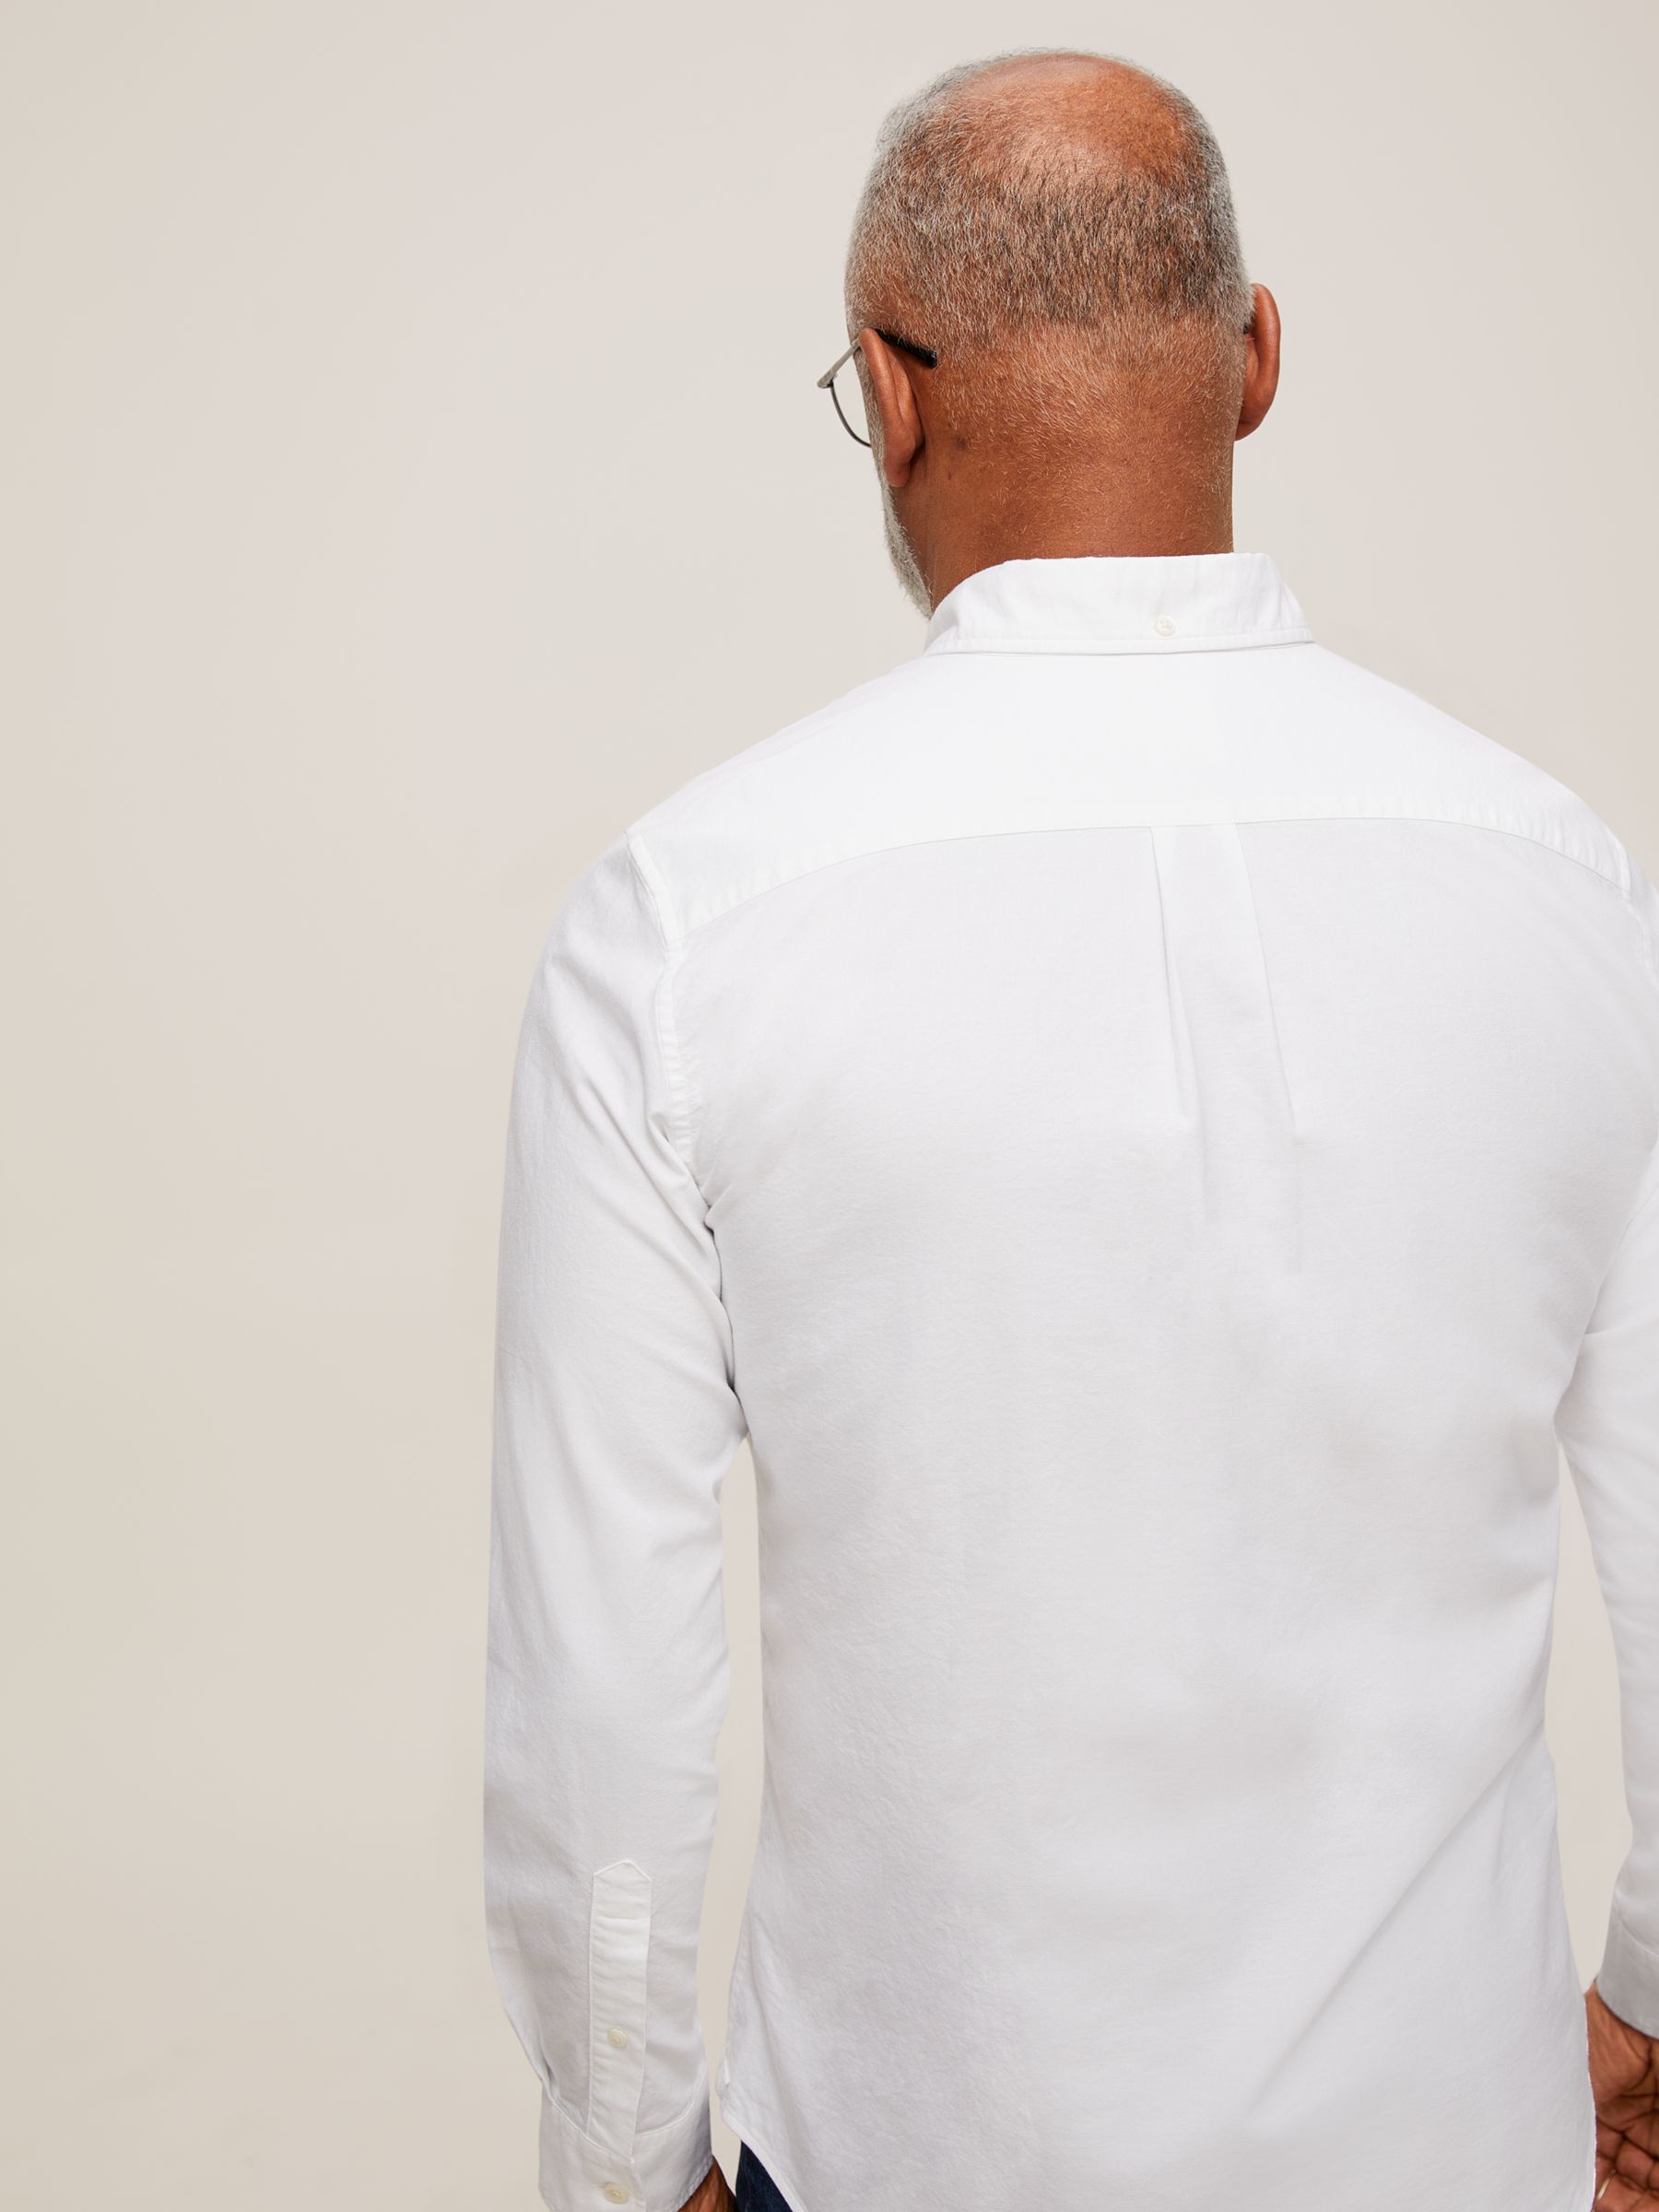 Uty Apparel long sleeve denim shirt, 100% cotton, unisex, Brighton Gardens  logo